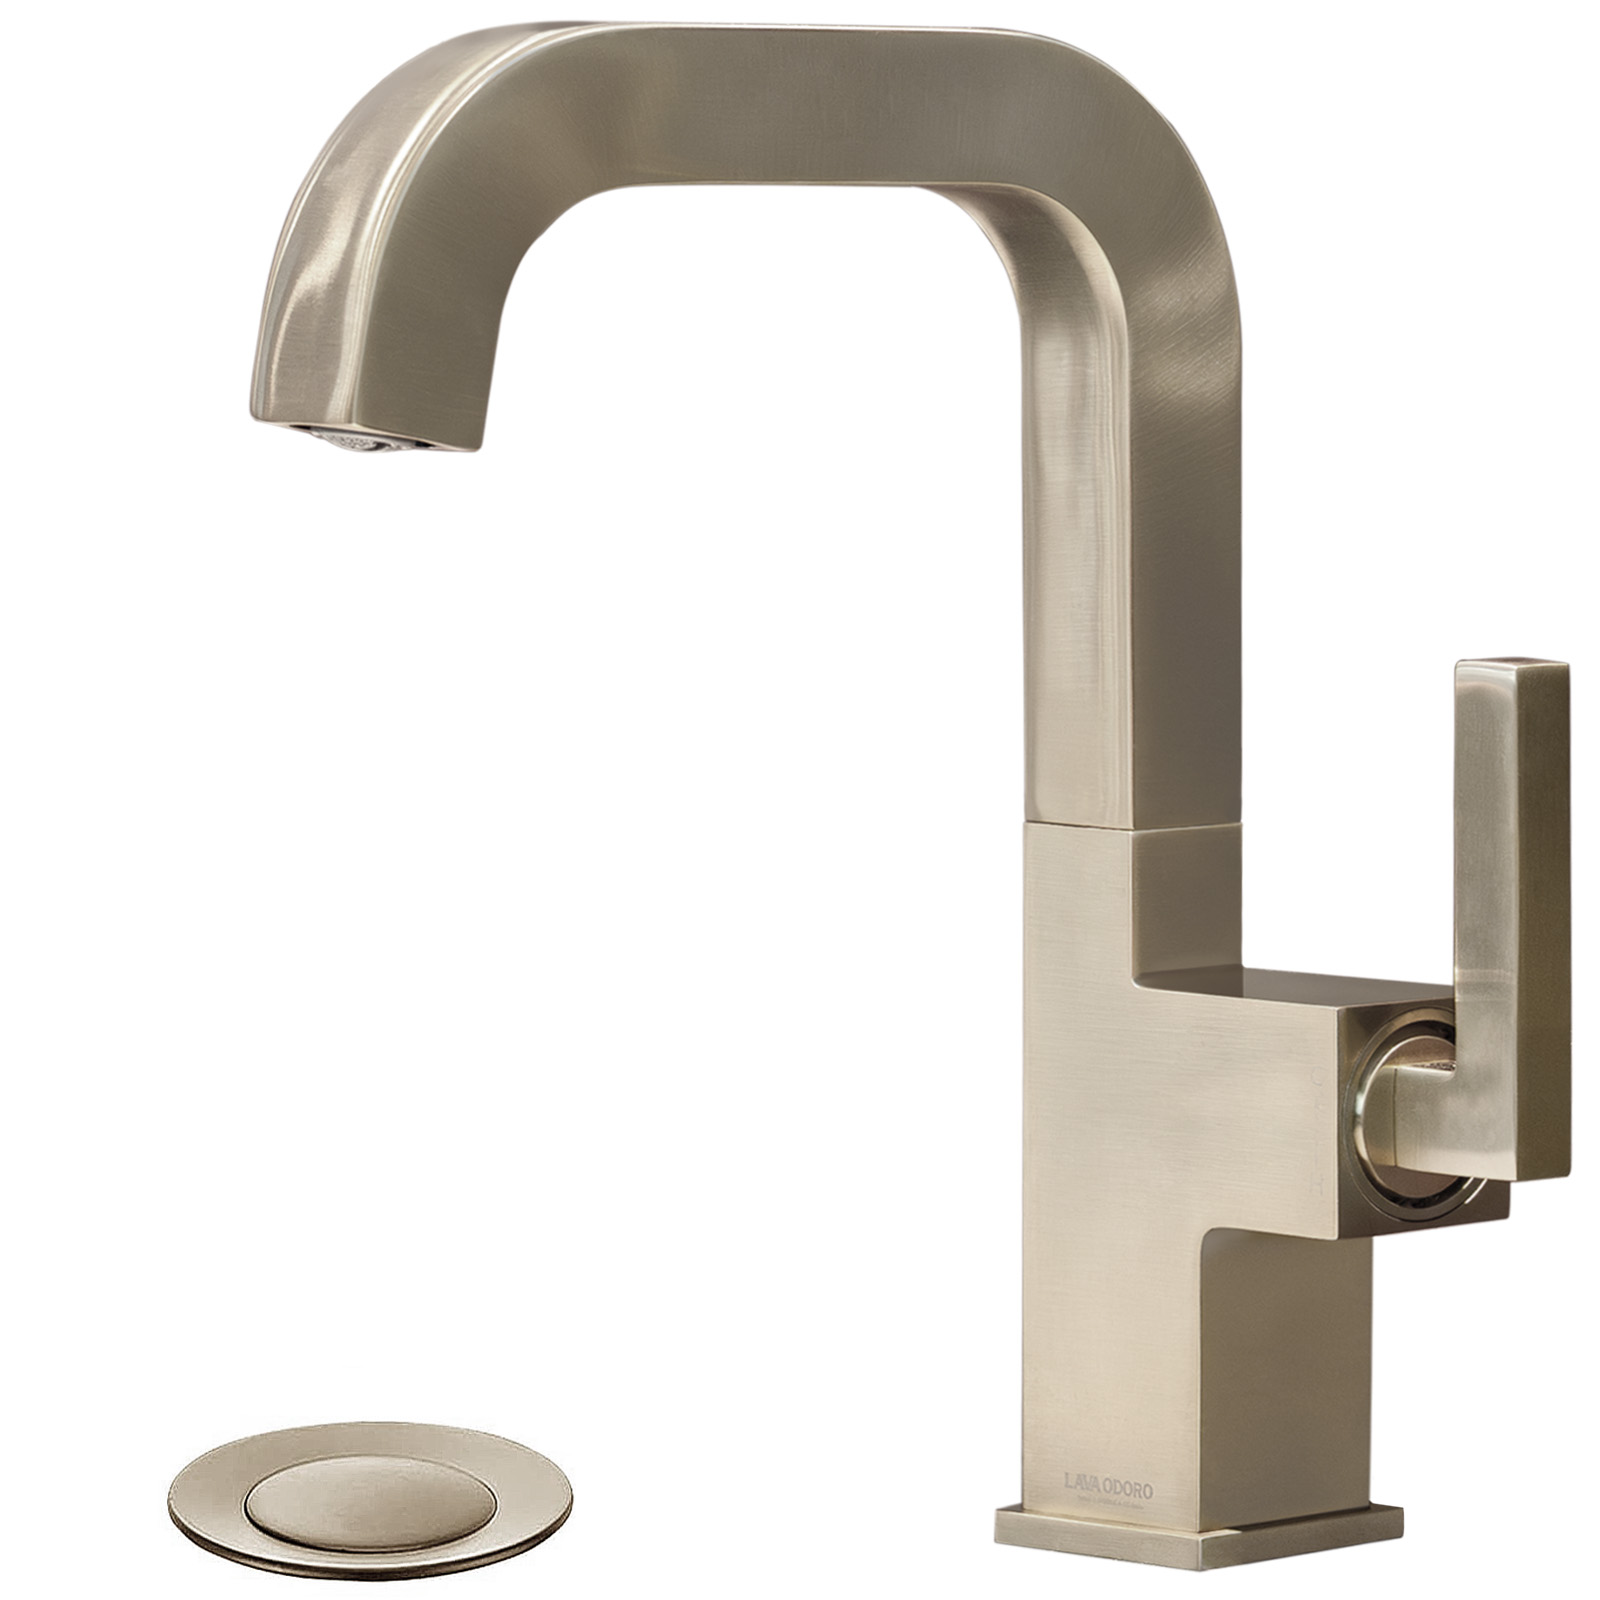 Brass Single Handle Bathroom Faucet with 360° Swivel Spout BF204 - Lava Odoro-LAVA ODORO